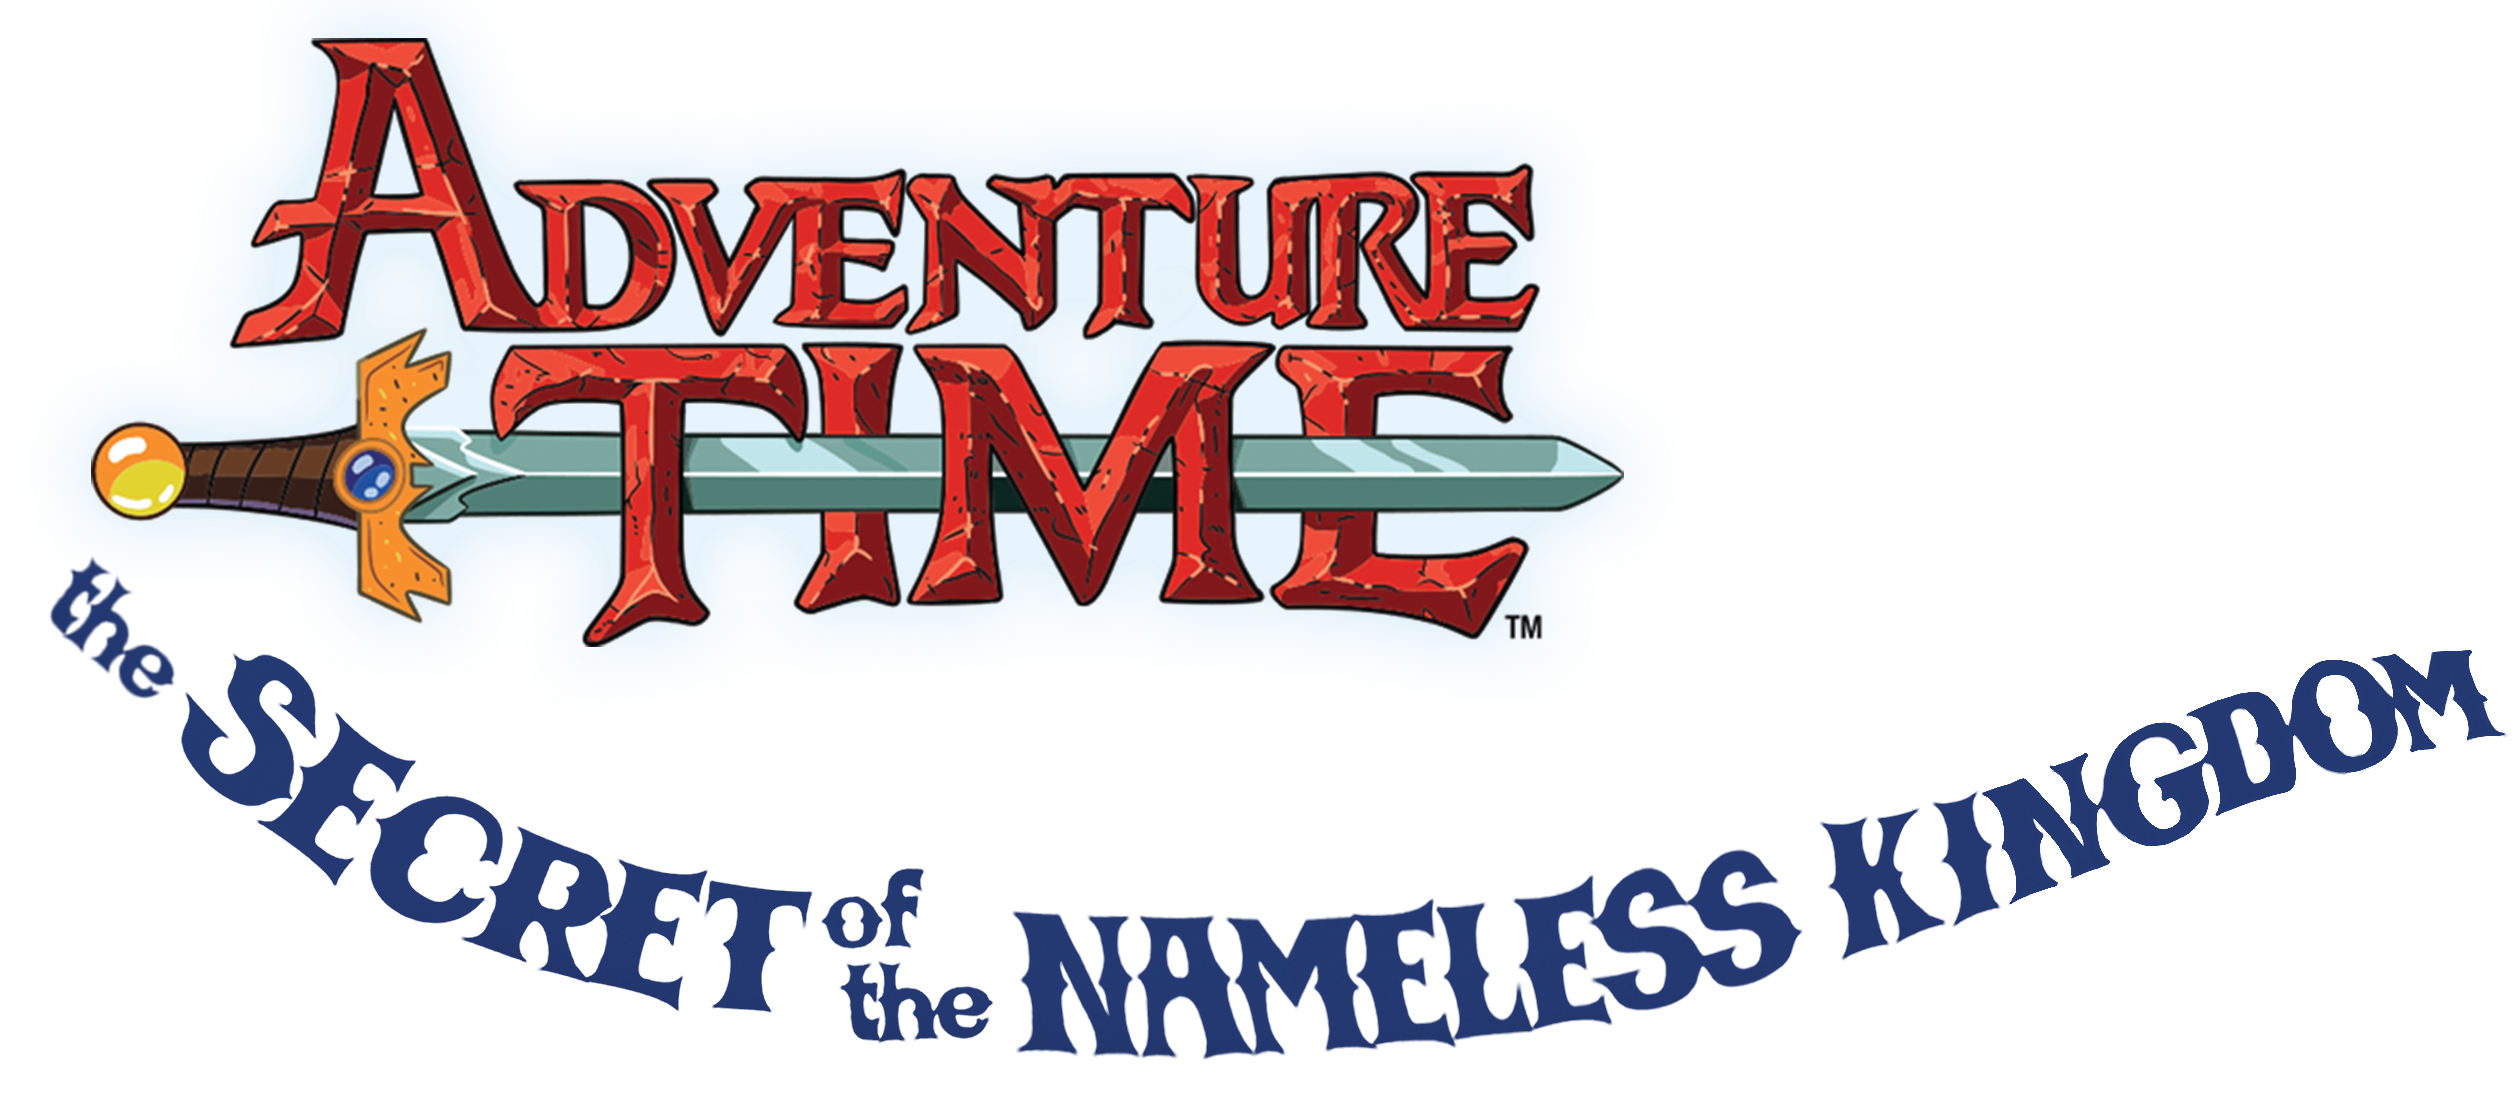 Adventure time secret of the nameless kingdom steam фото 32